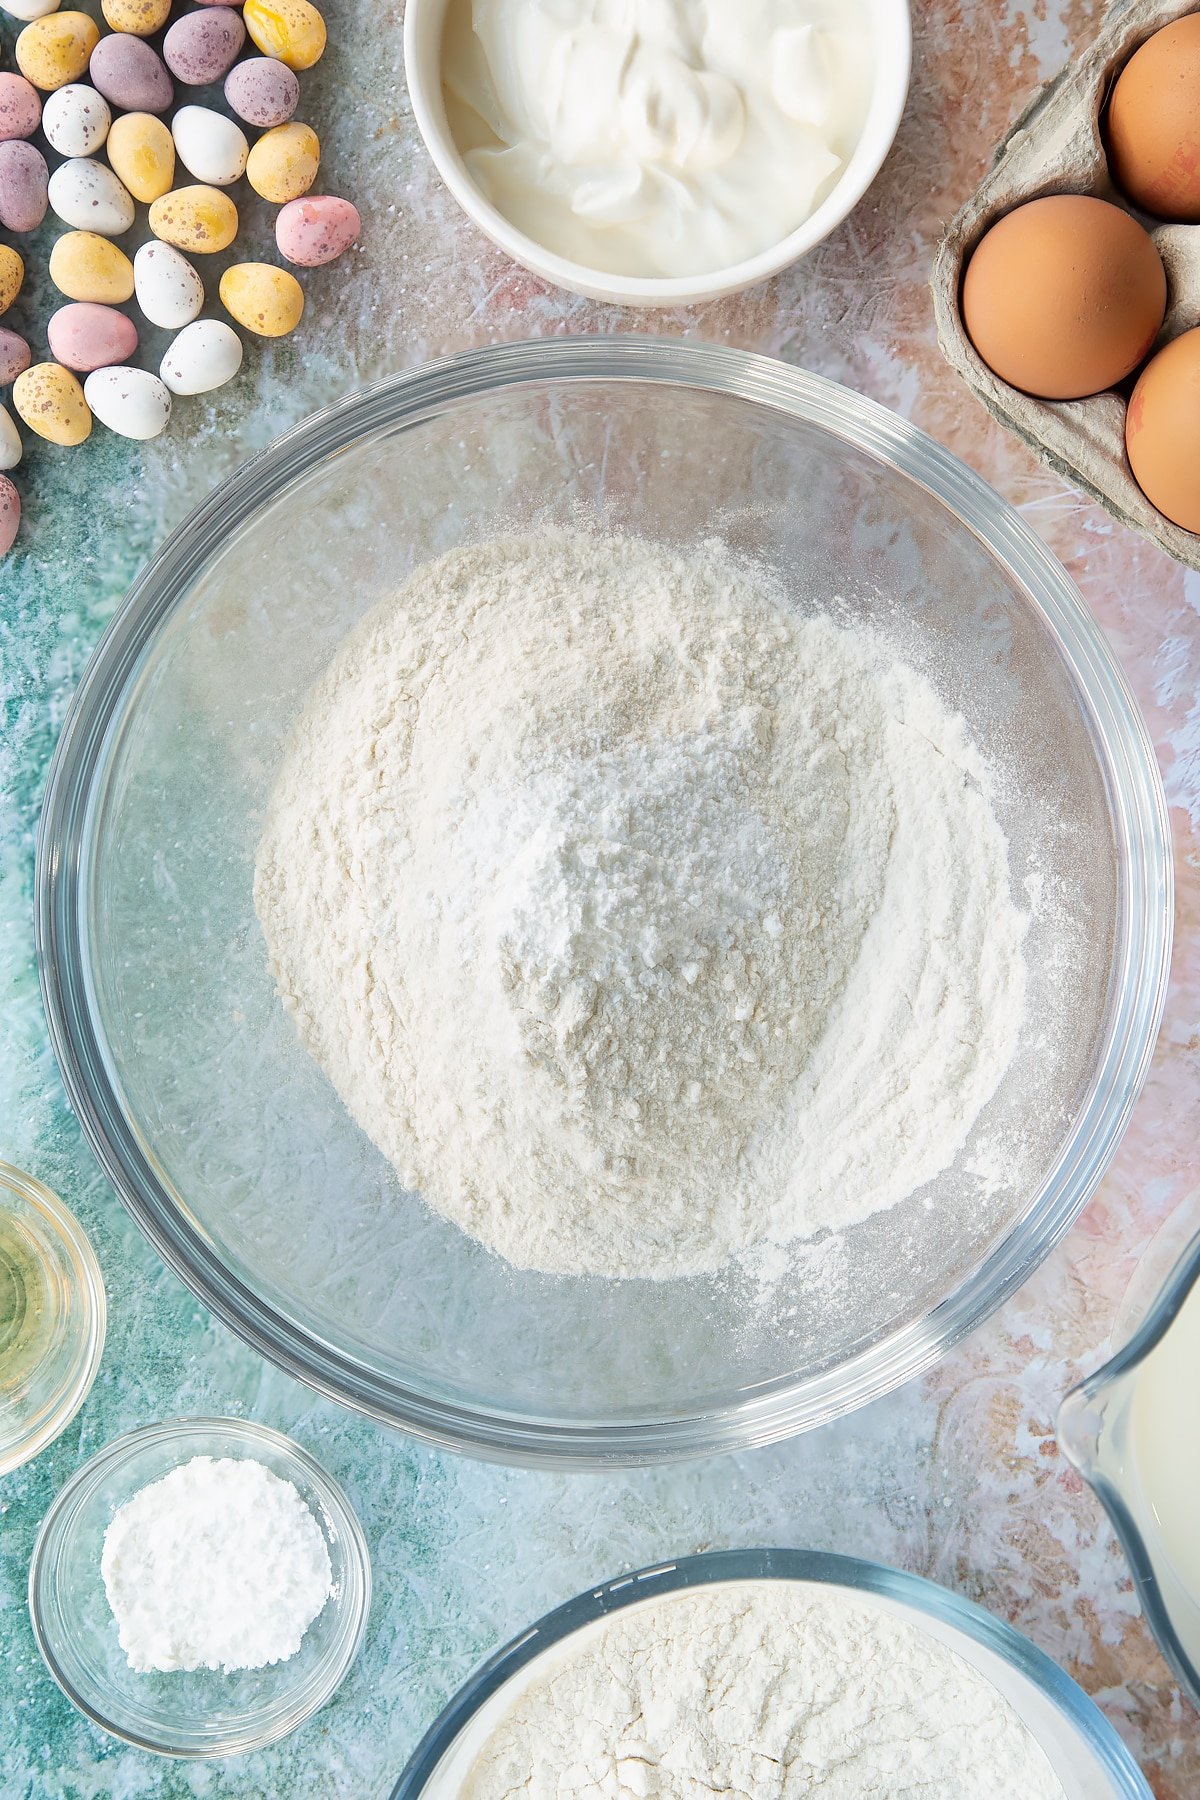 Flour and baking powder in a bowl. Ingredients to make Mini Egg pancakes surround the bowl.